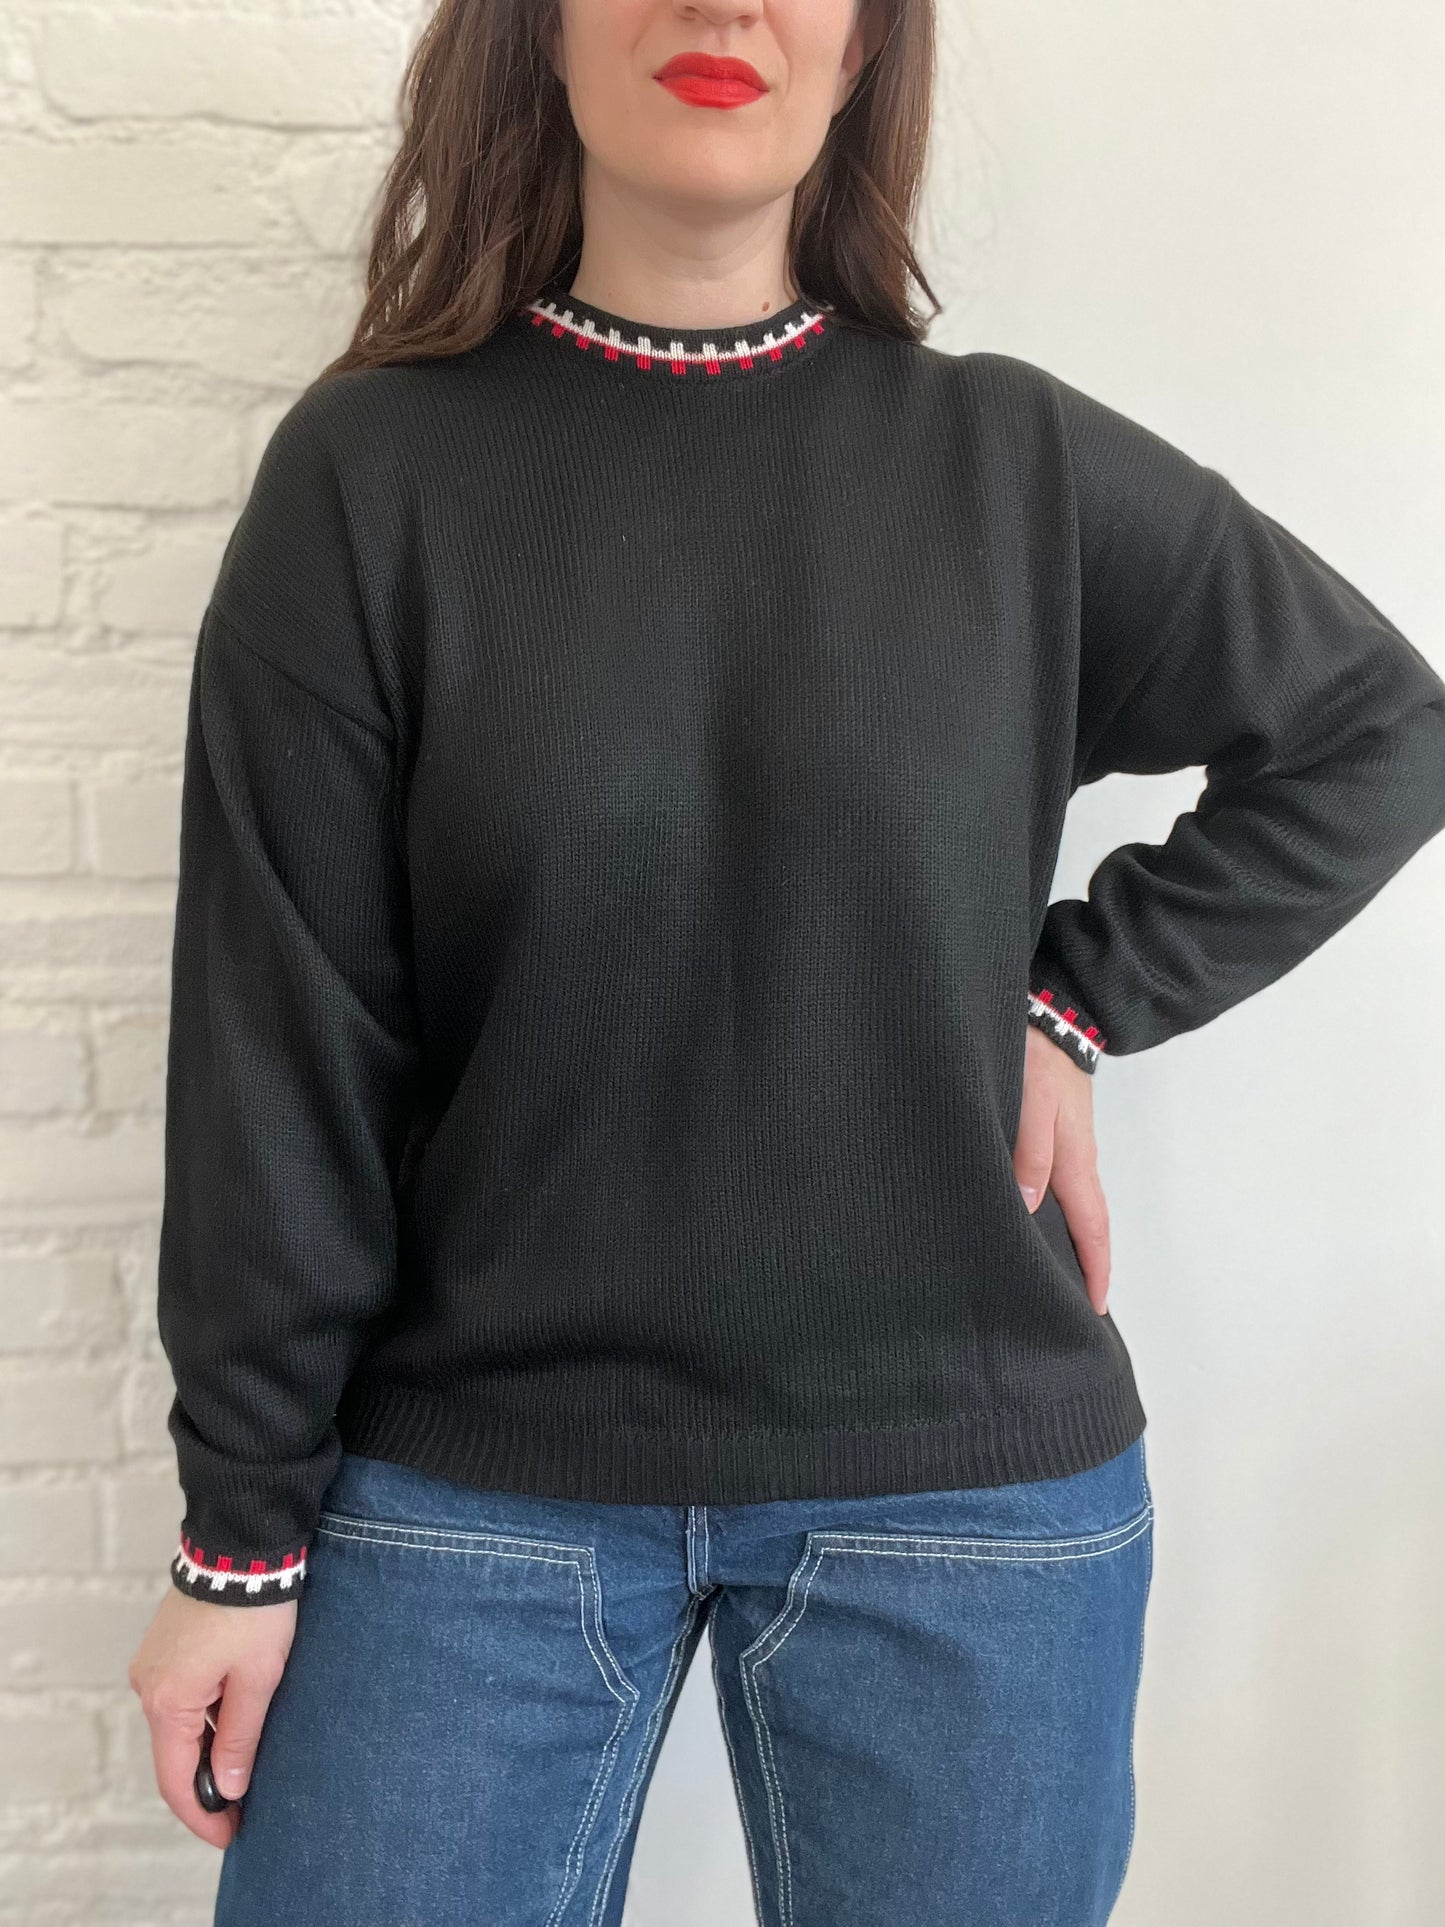 Black & Red Detail Sweater - L